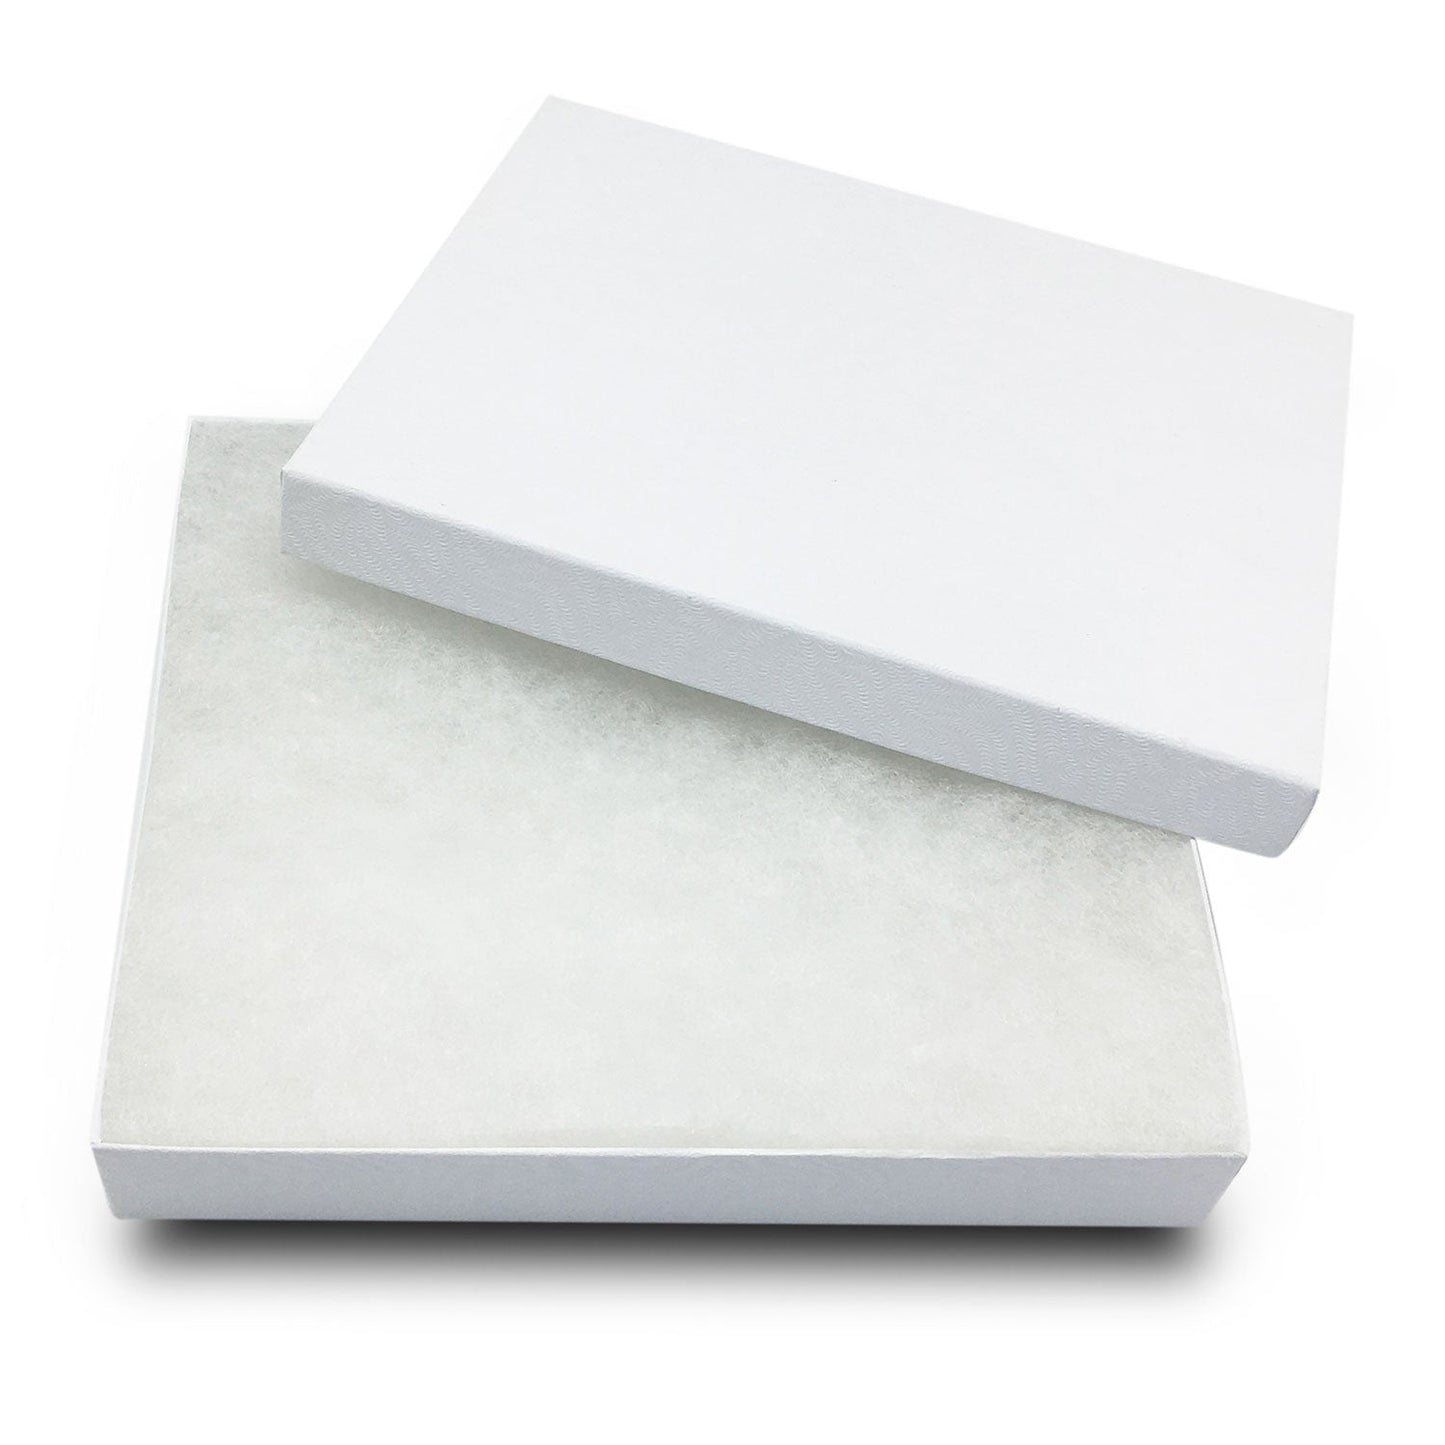 #65 - 6 1/8" x 5 1/8" x 1 1/8" White Swirl Cotton Filled Jewelry Boxes